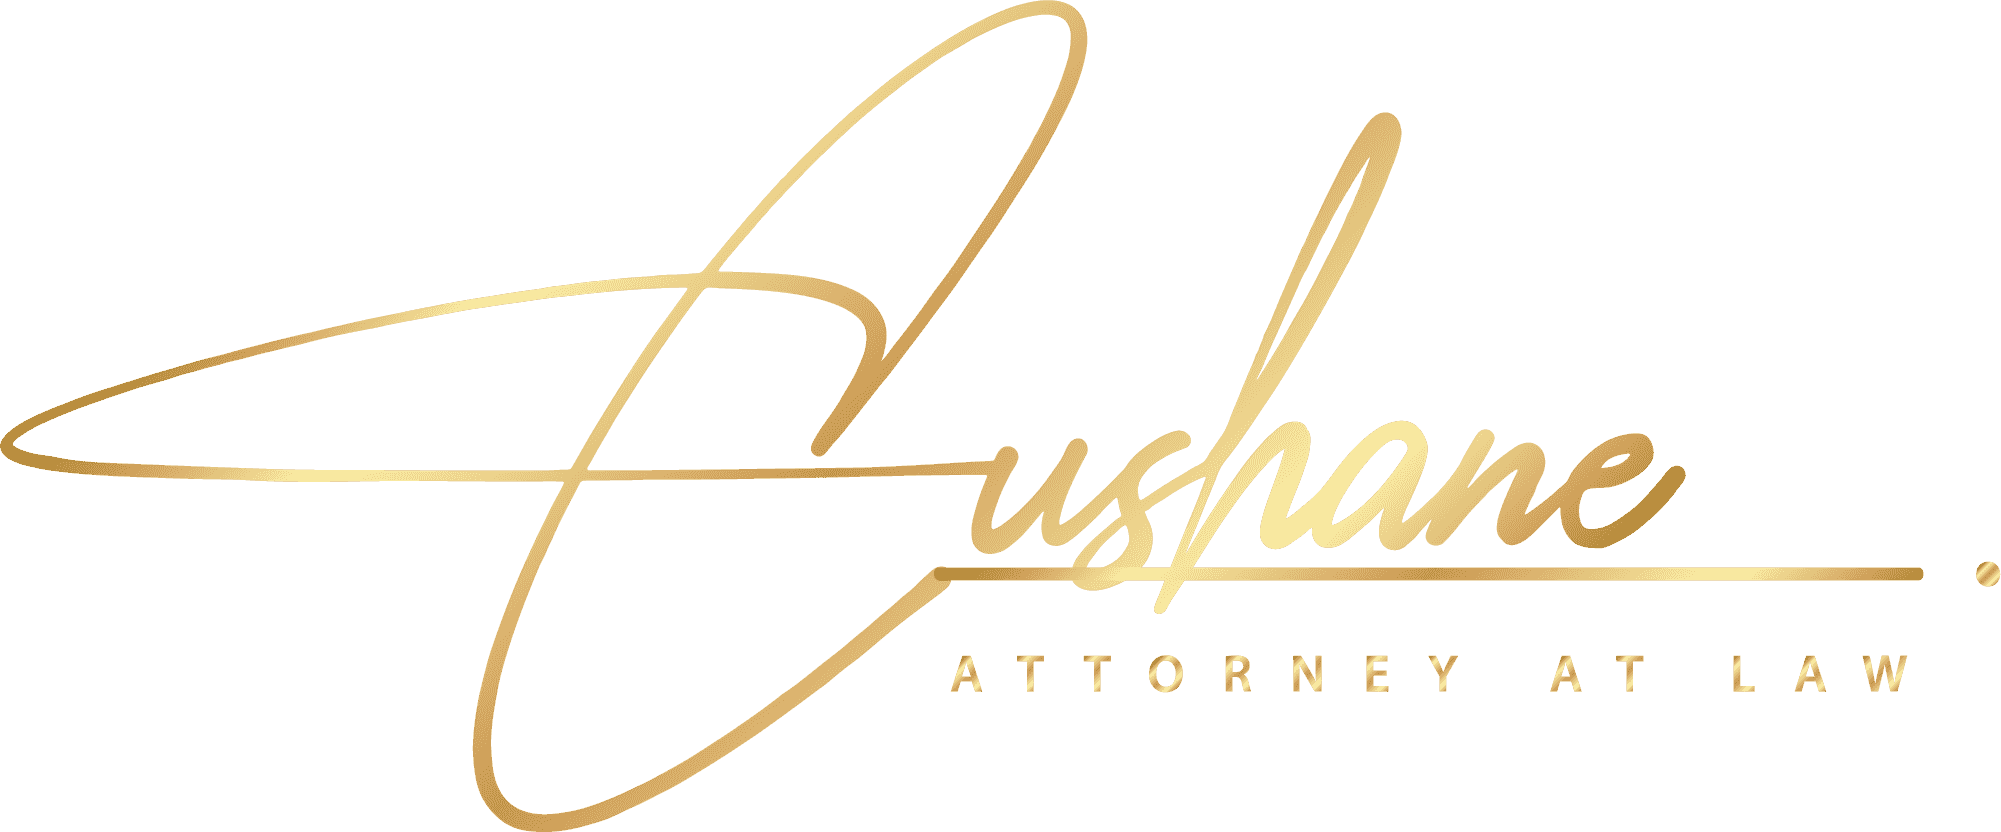 Cushane - Attorney at Law